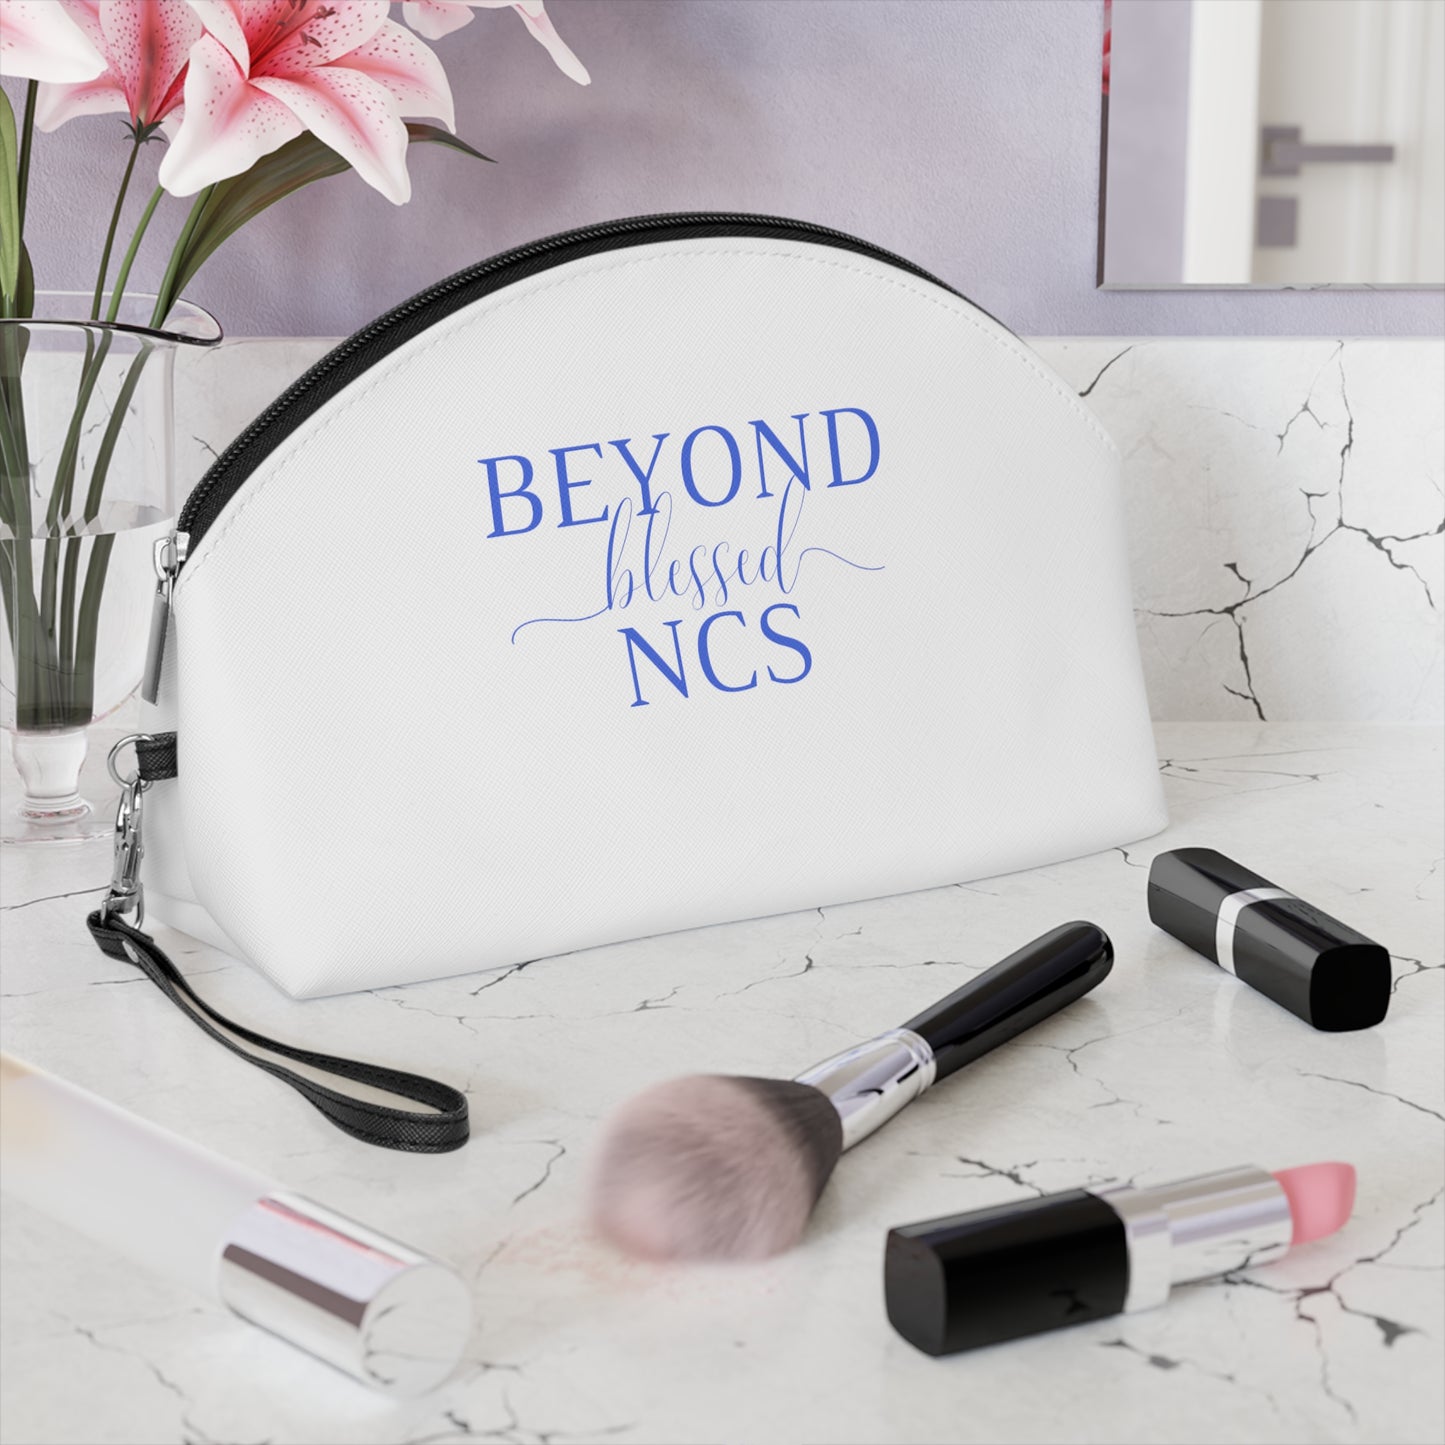 Beyond Blessed NCS - Makeup Bag - Royal Blue